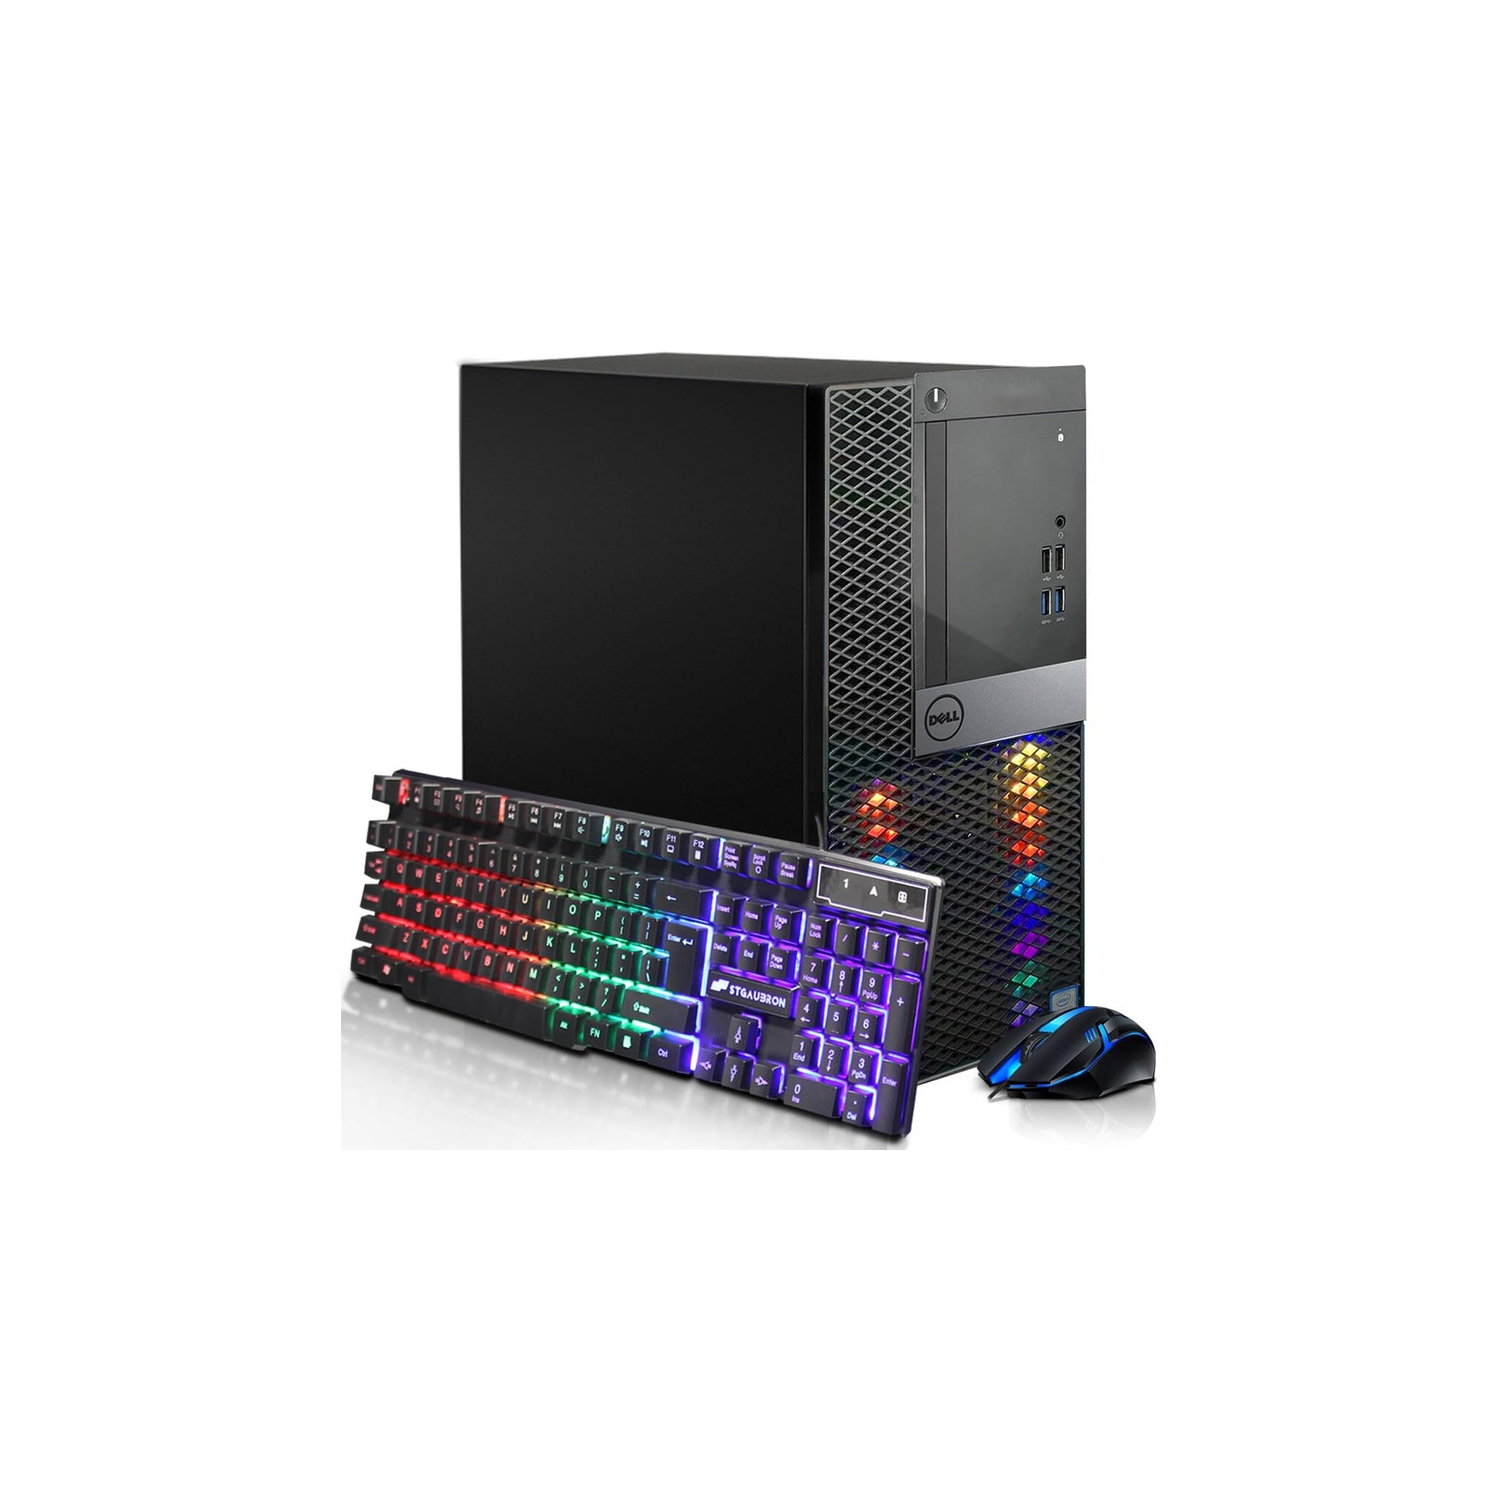 Dell RGB Gaming Desktop Computer, Intel Quad Core I7-6700 up to 4.0GHz, GeForce GTX 1660 Super 6G, 32GB, 2T SSD, RGB KB & MS, 600M WiFi&BT 5.0, Win 10 Pro -Refurbished Excellent